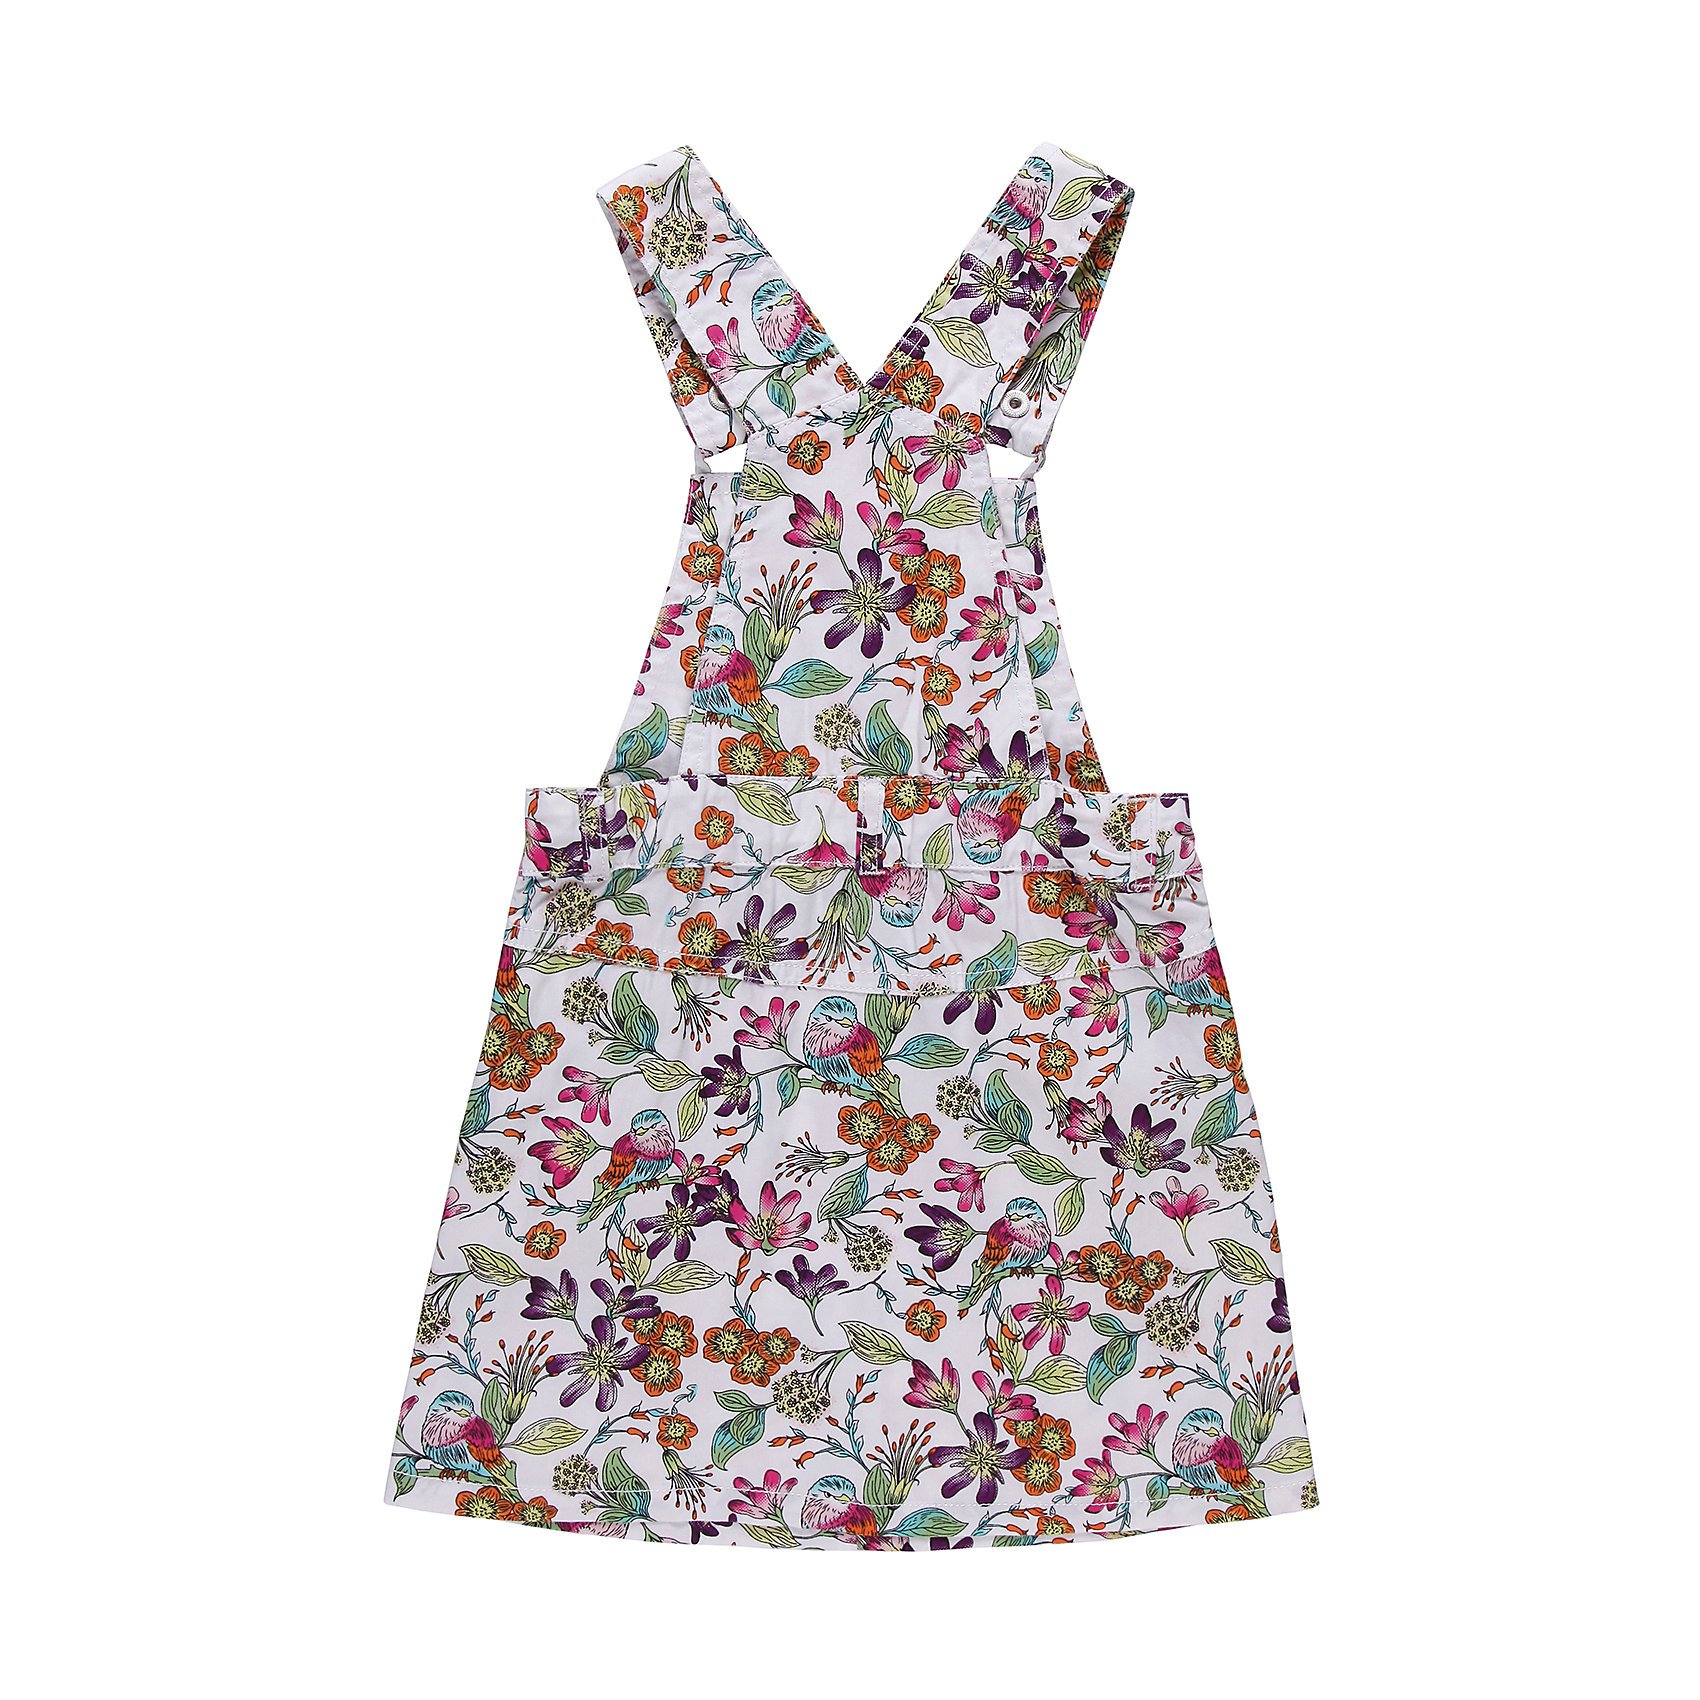 Летние сарафаны купить на озон. 195236 Sweet Berry сарафан. Sweet Berry сарафан платье. Детские сарафаны на бретельках. Сарафан на бретелях для девочки.